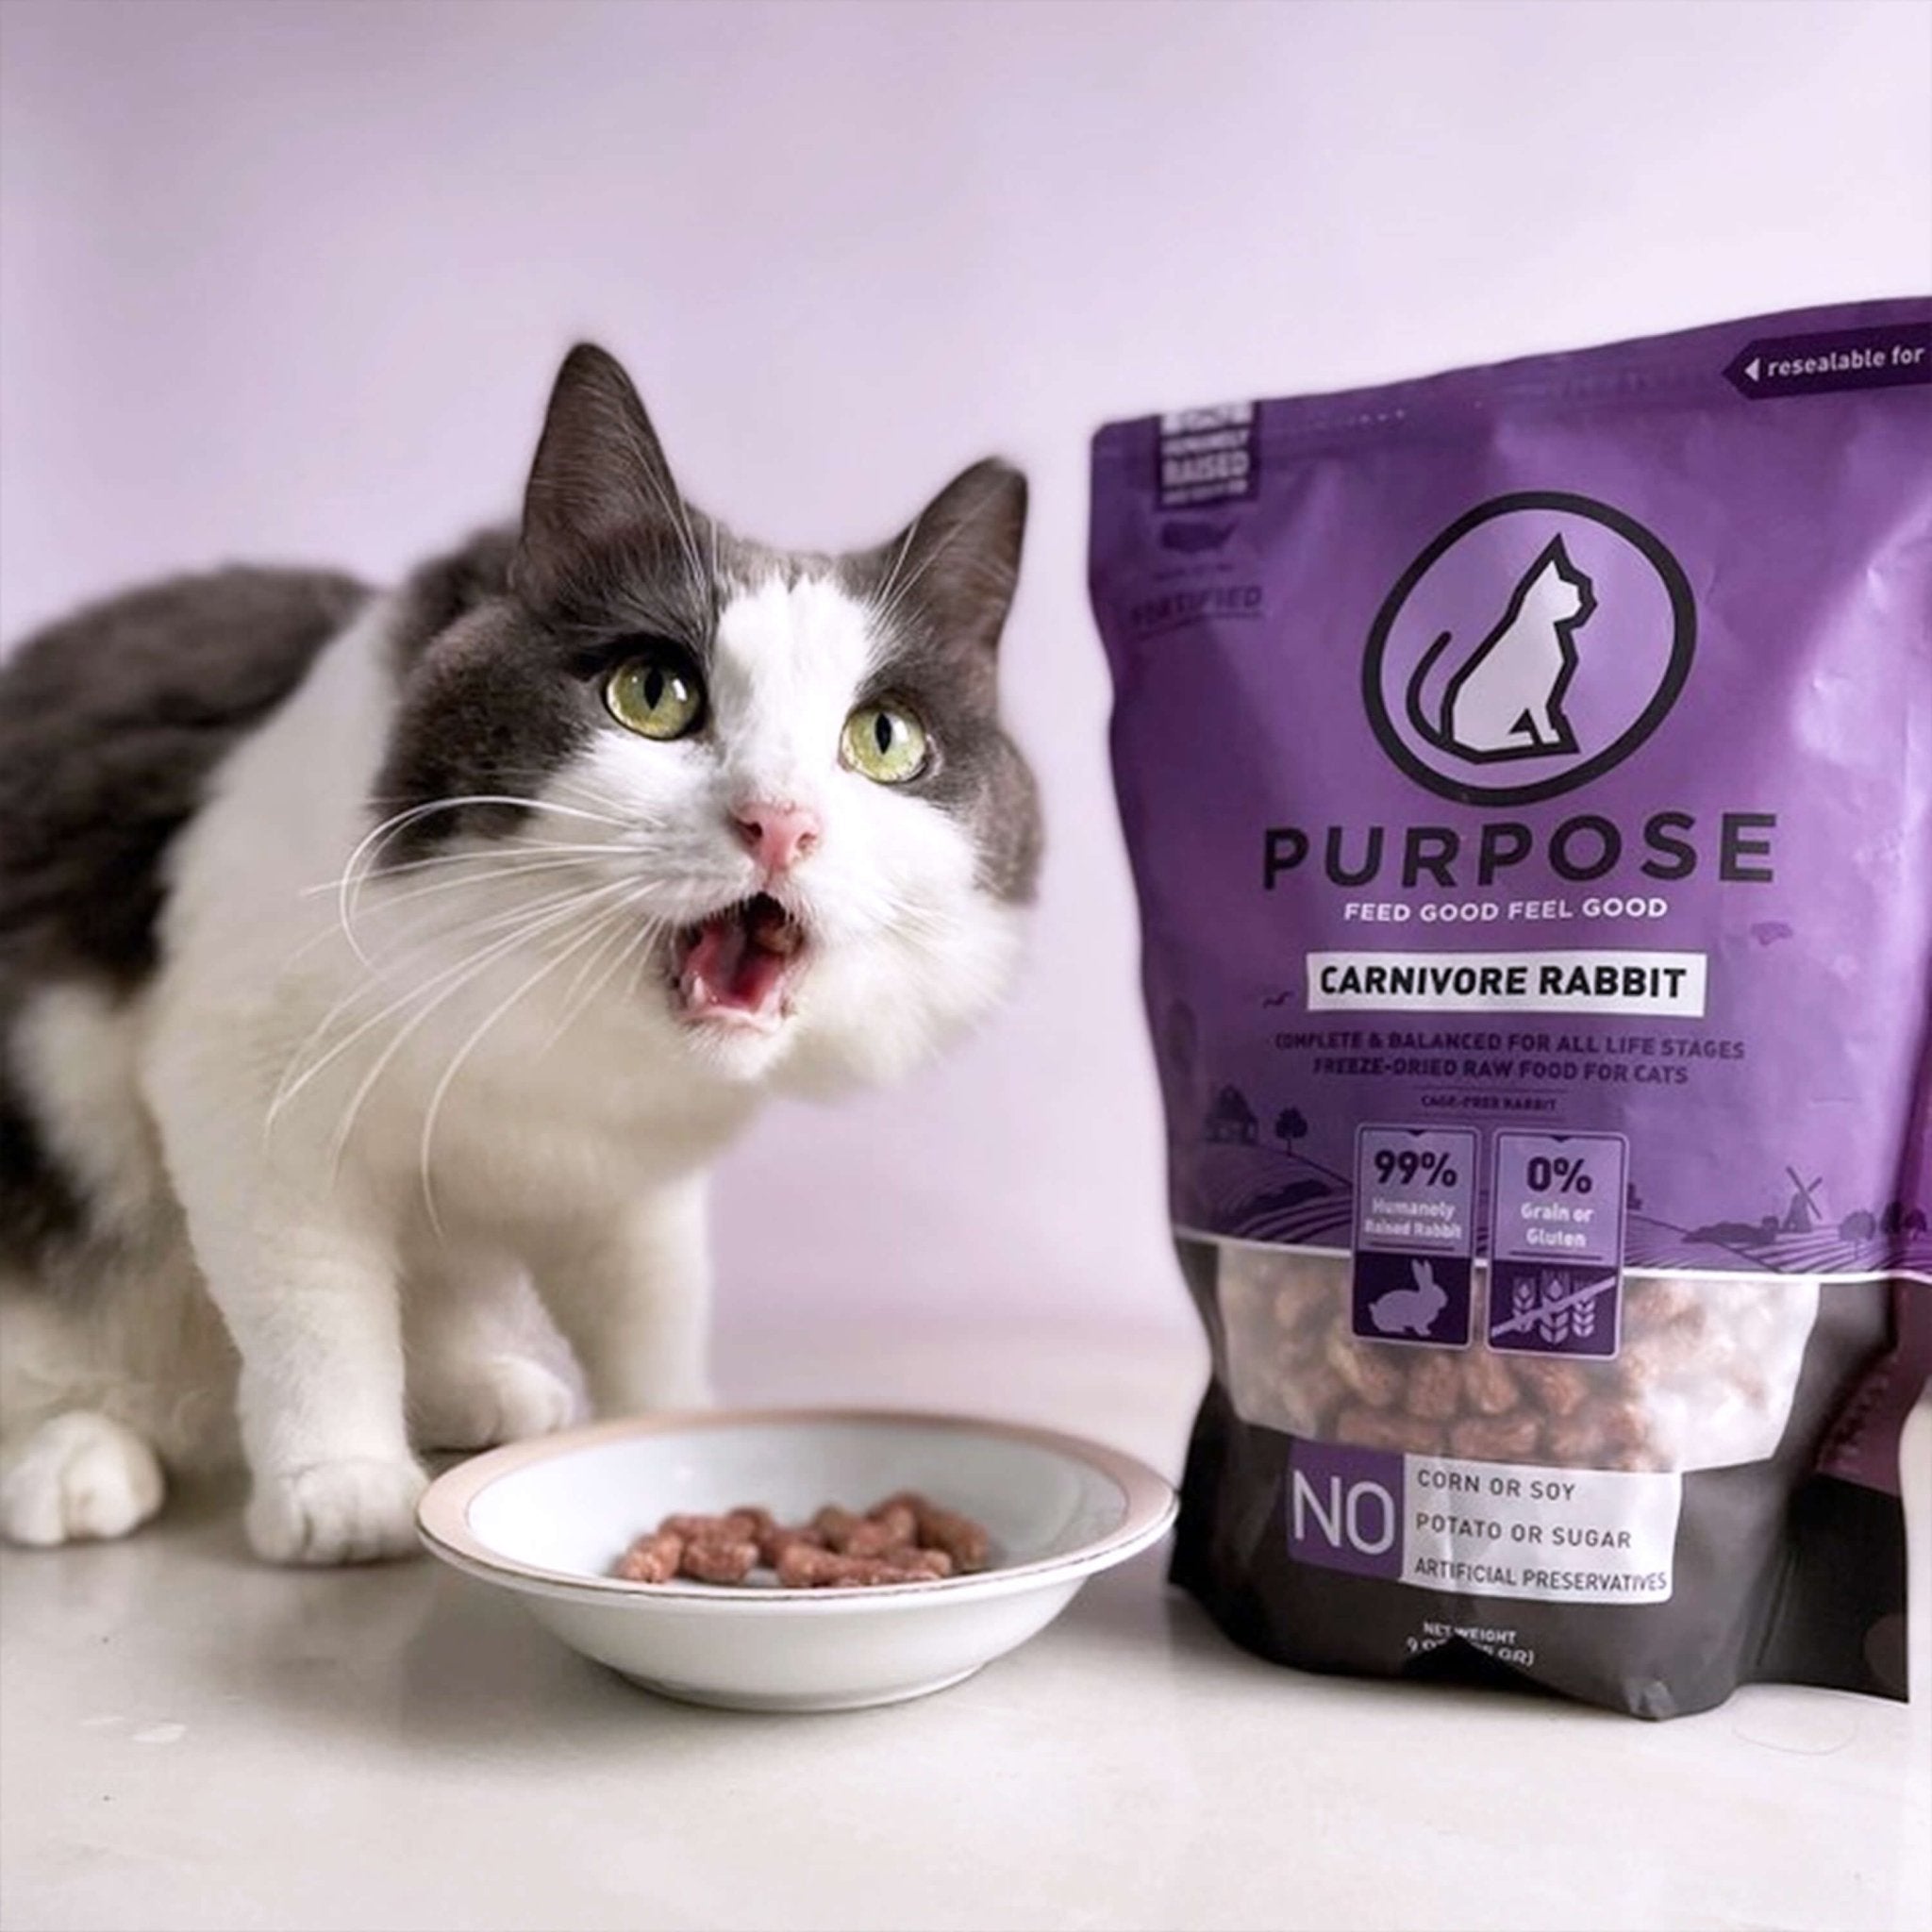 Carnivore Rabbit Freeze-Dried Raw Cat Food - PURPOSE PET FOOD